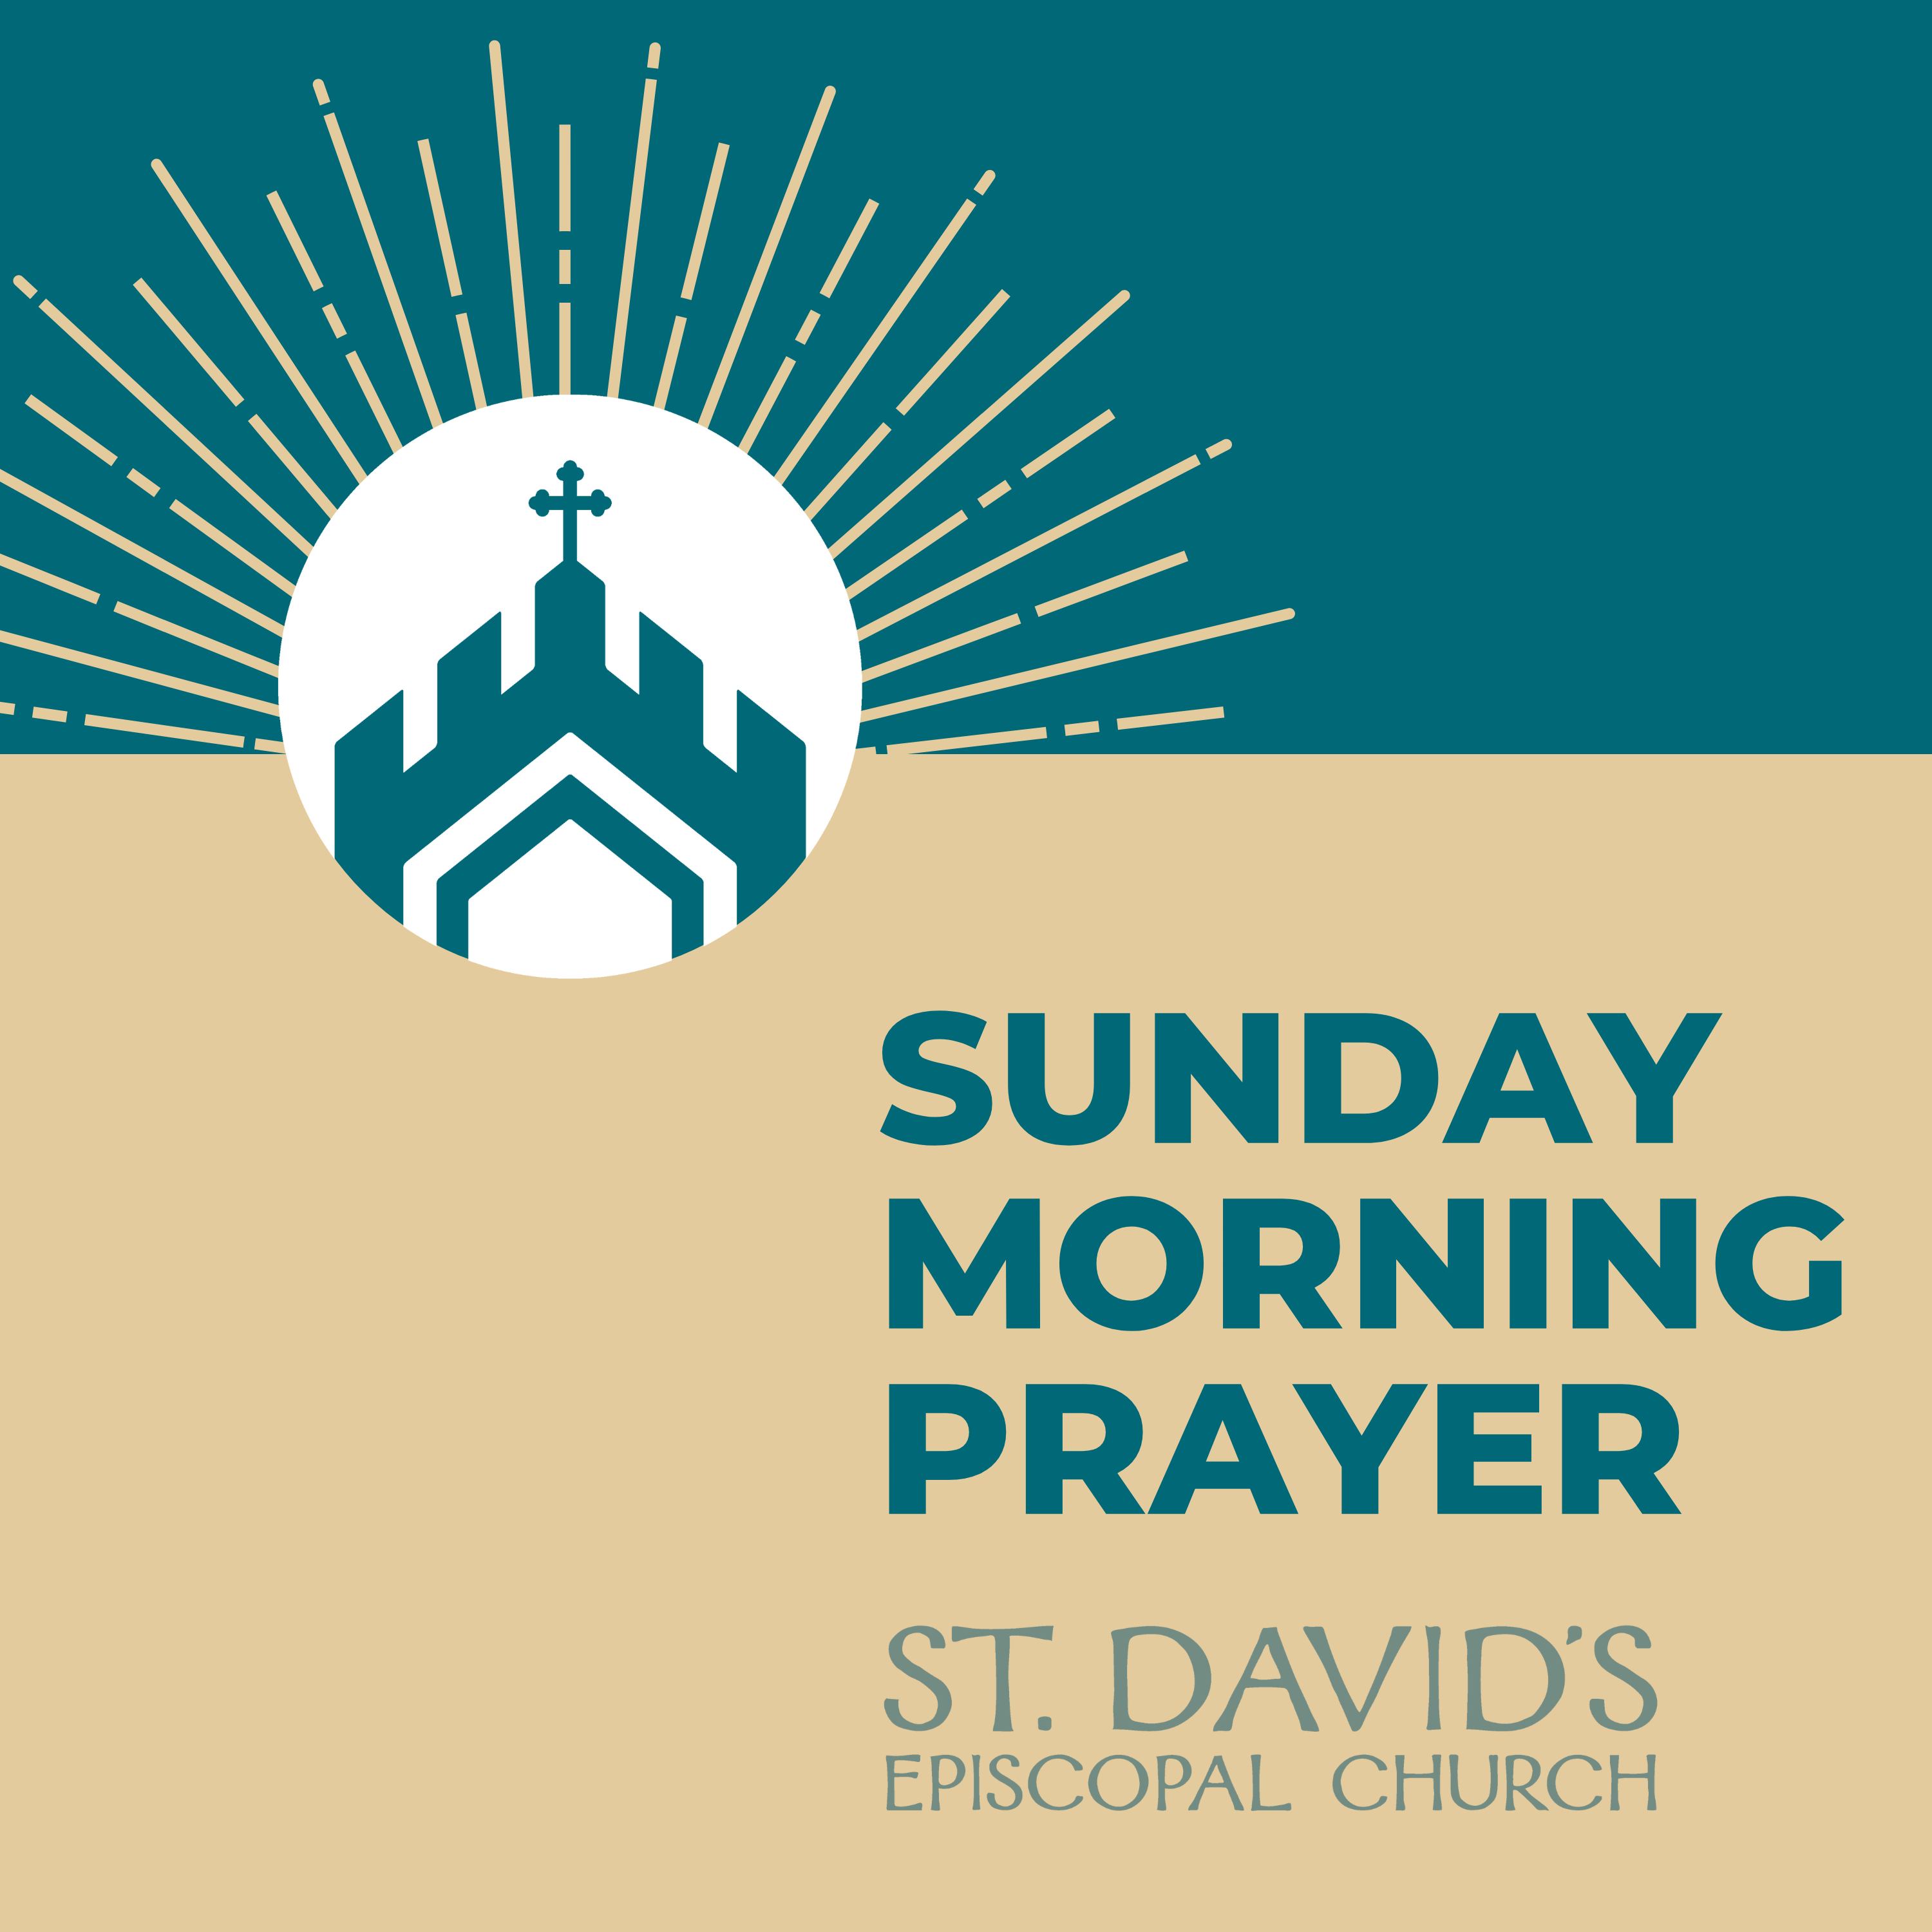 Sunday Morning Prayer: Rite Two, Year 2, 21st Sunday after Pentecost